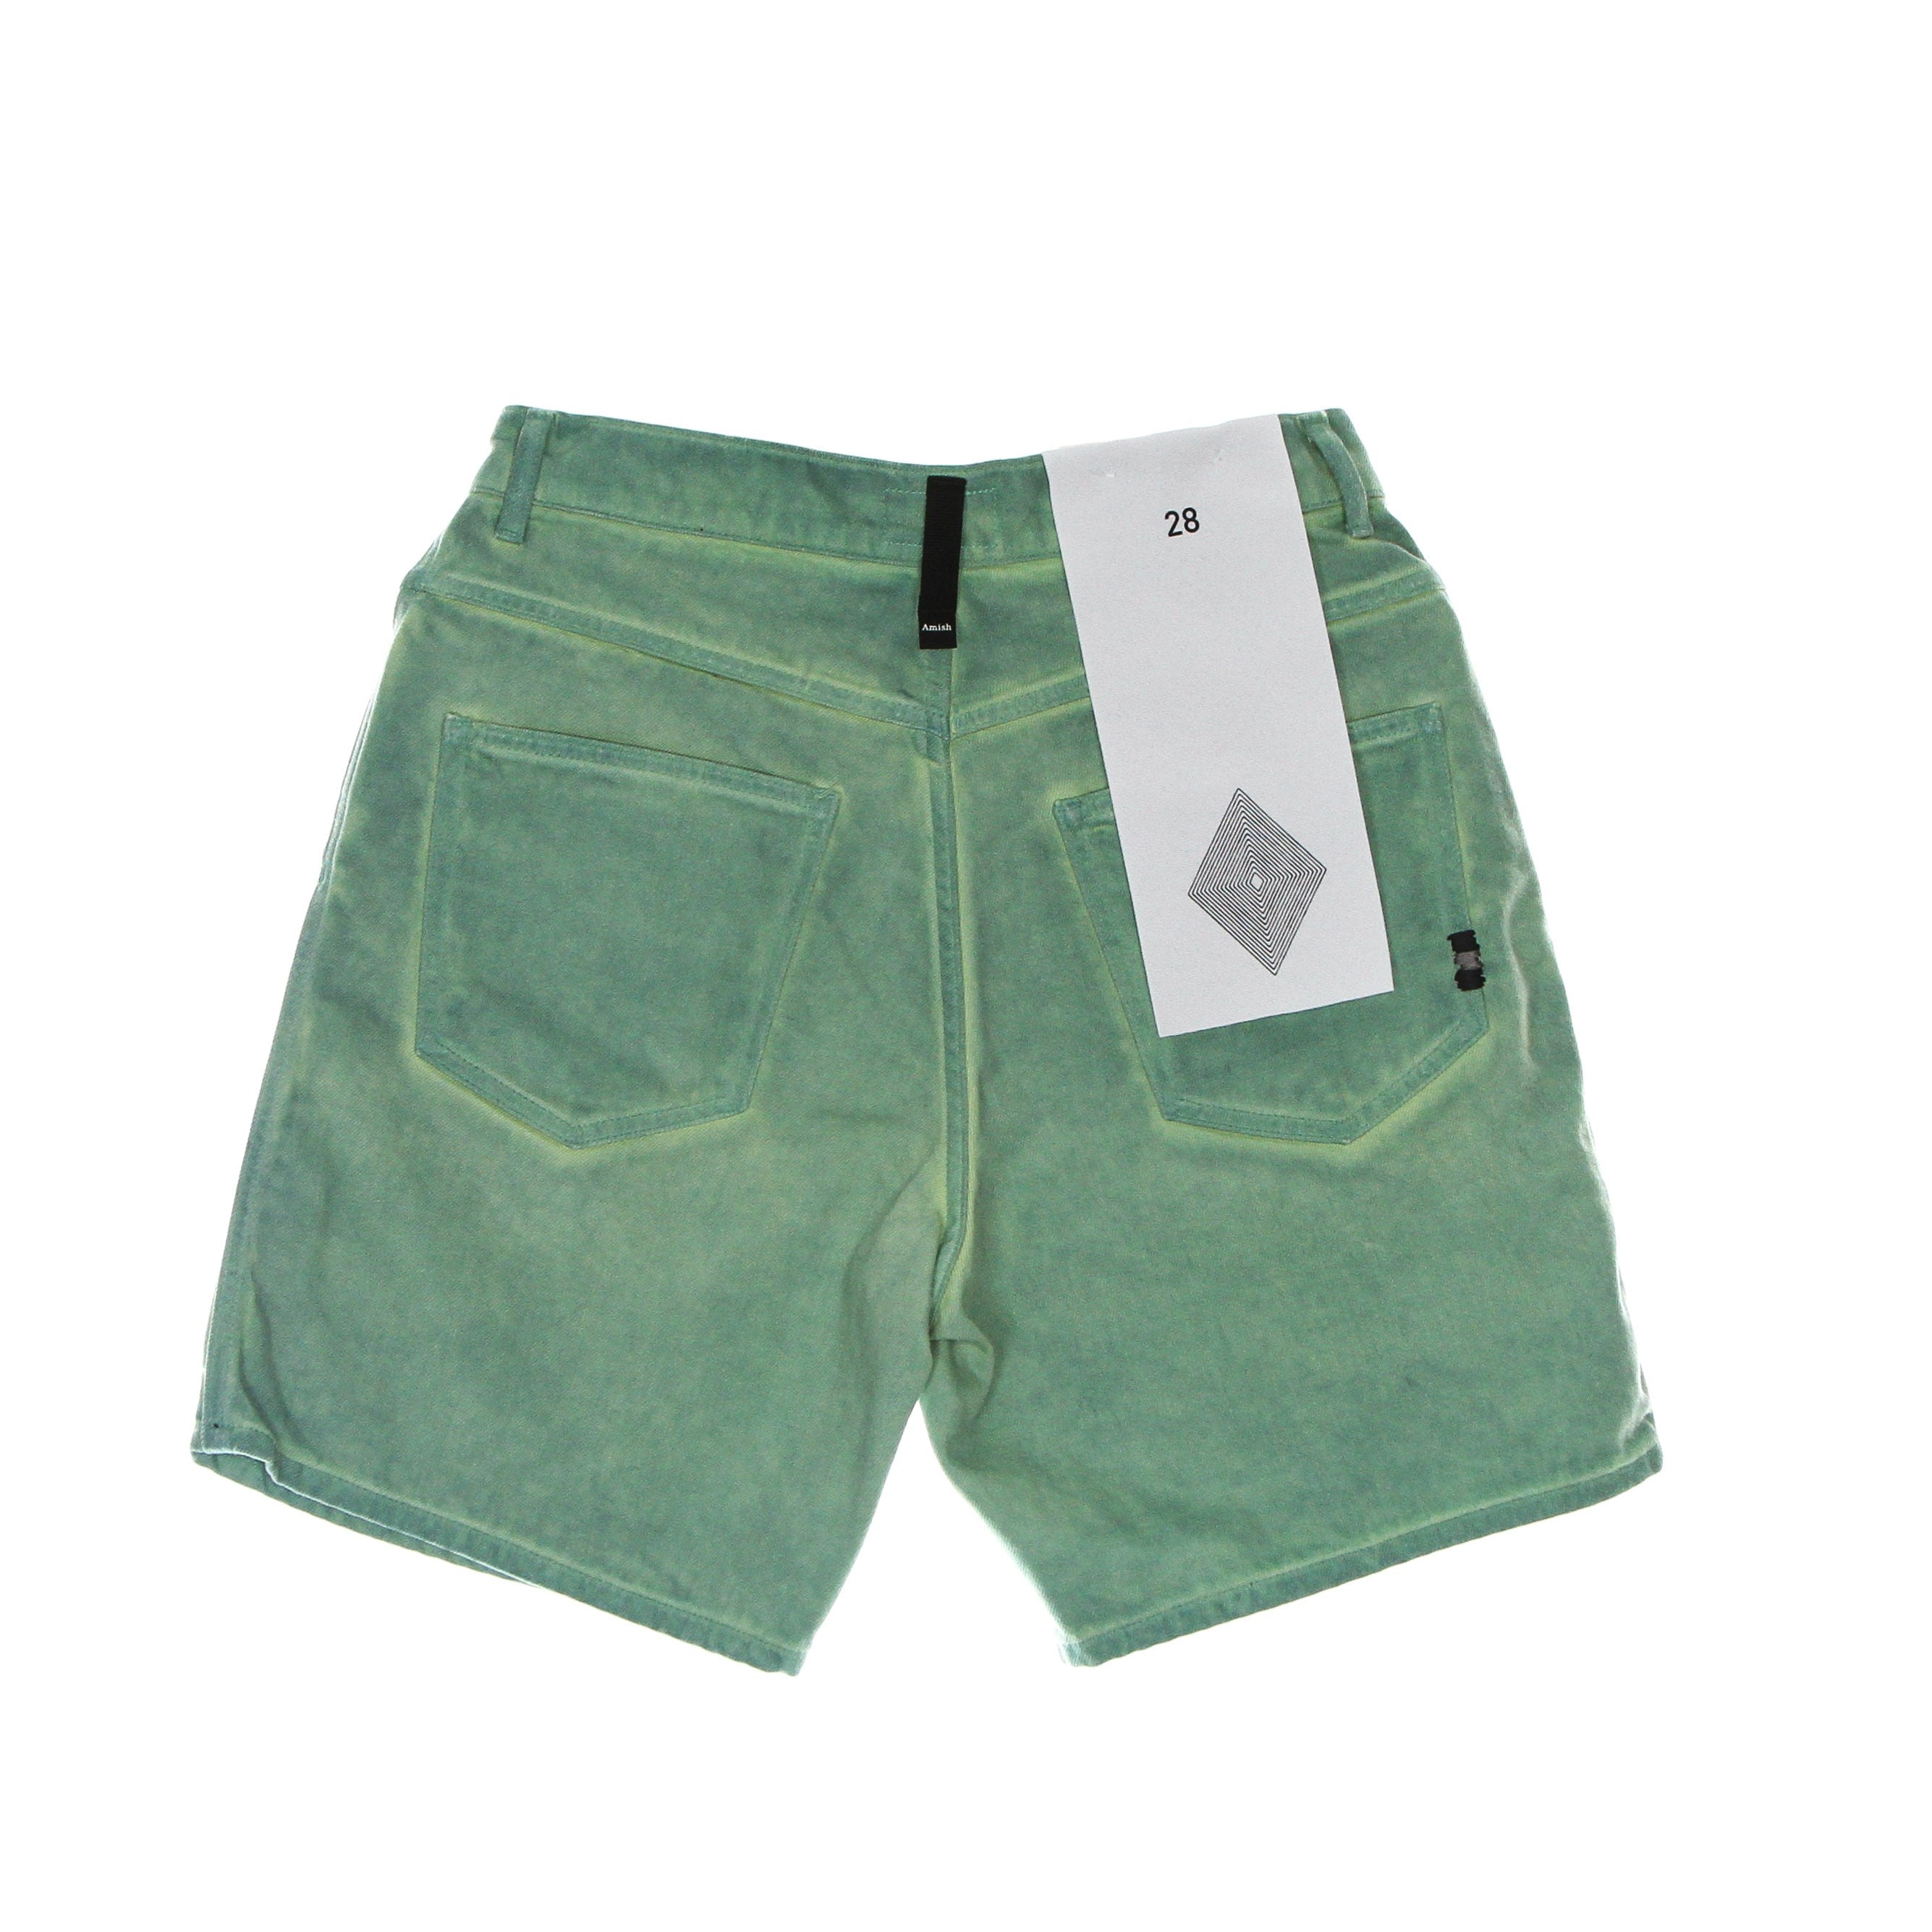 Short Men's Jeans Bermuda Bernie Bull Spray Dyed Green